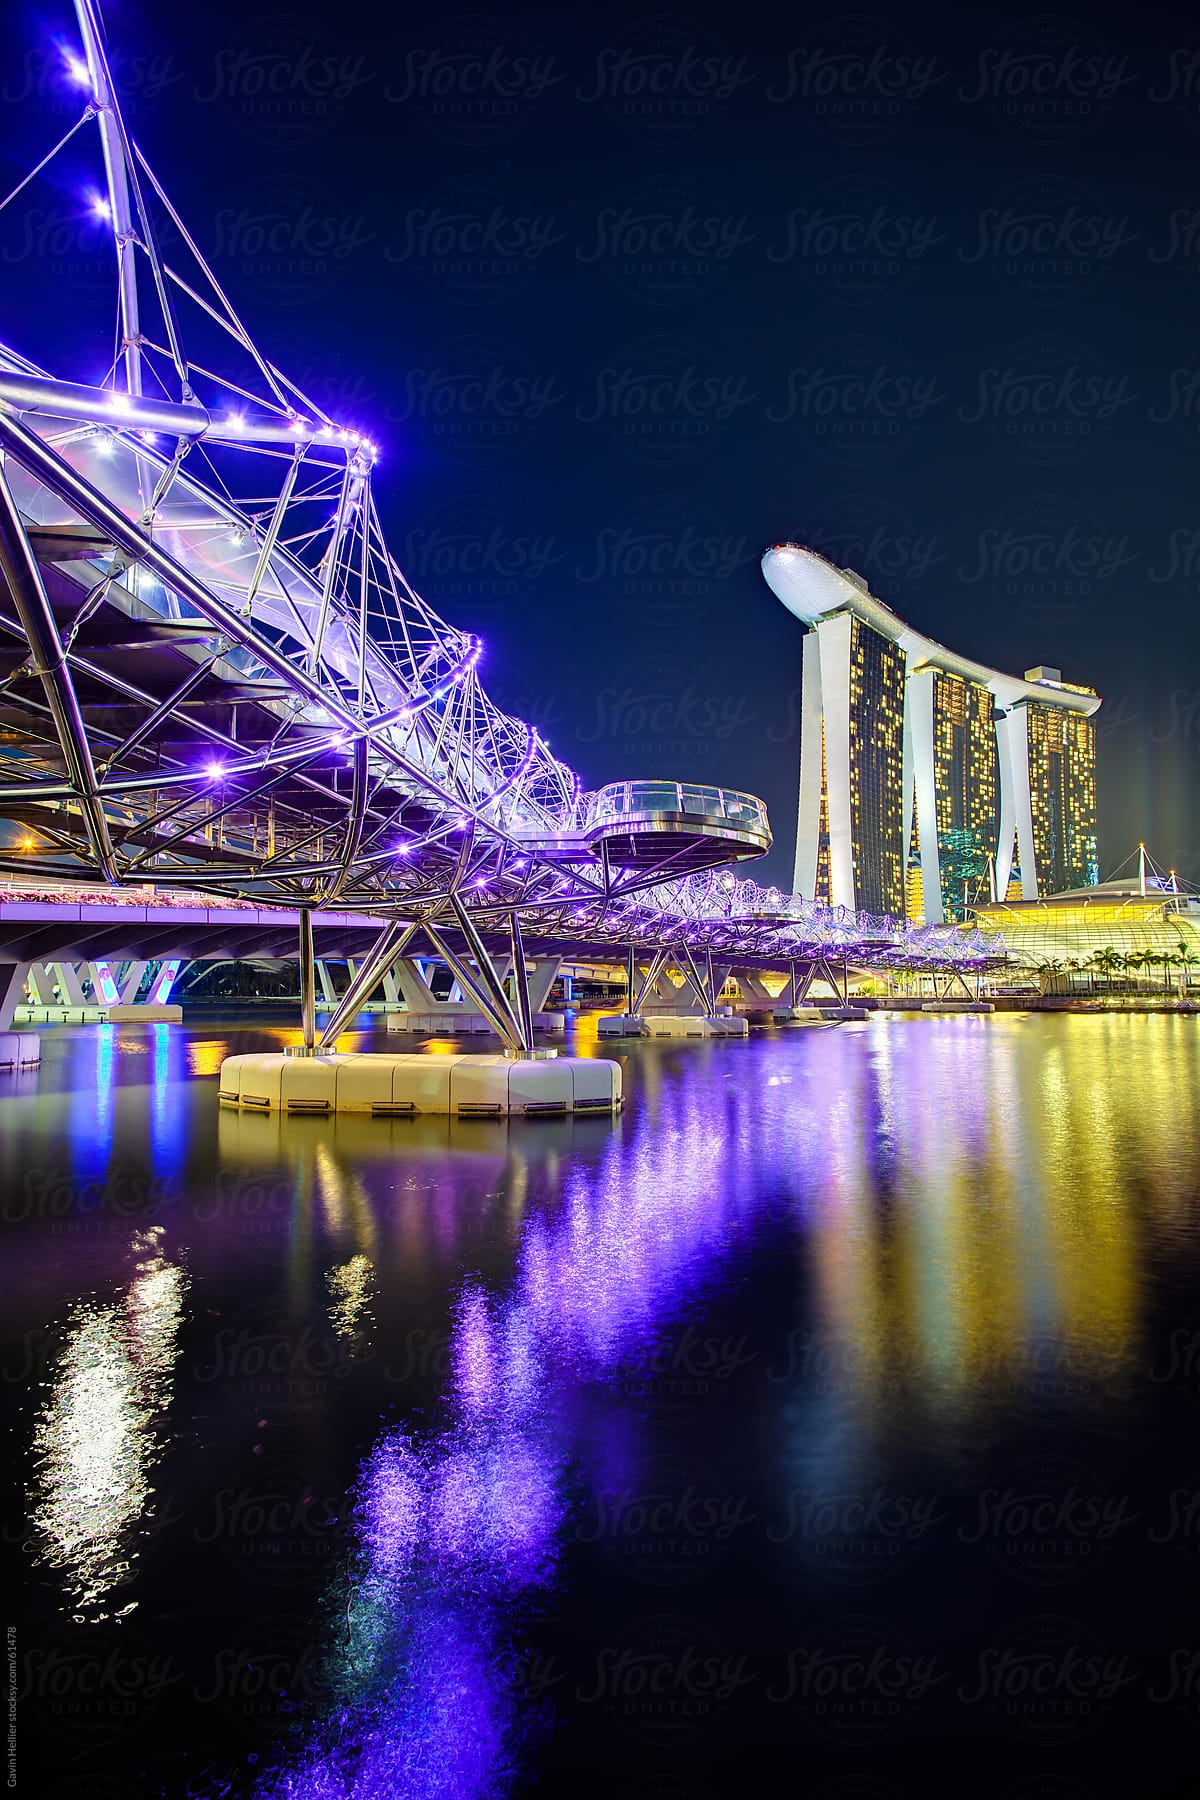 South East Asia, Singapore, the Helix bridge leading across Marina Bay to the Marina Bay Sands hotel